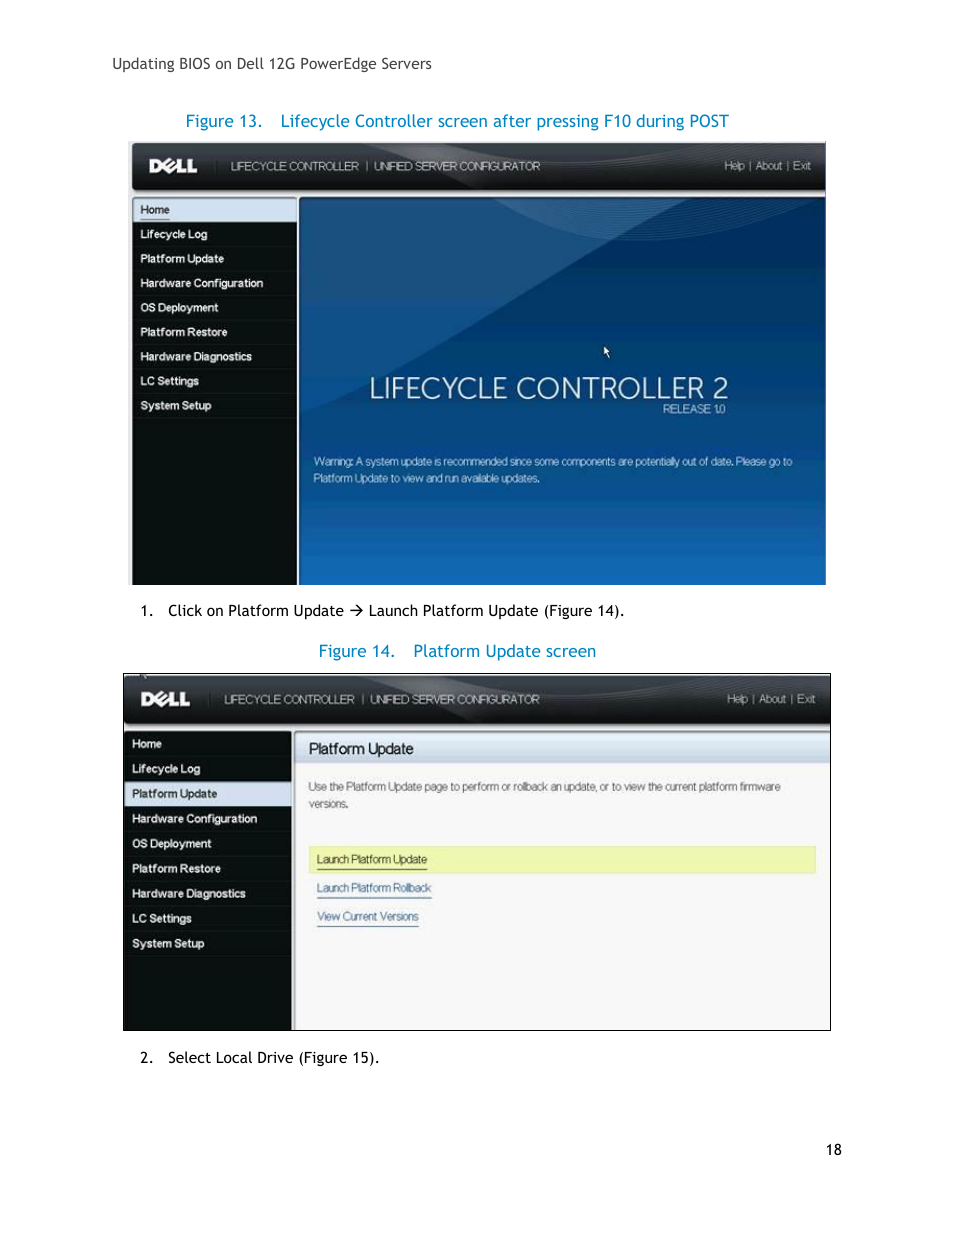 Figure 13, Figure 14, Platform update screen | Dell POWEREDGE R620 User